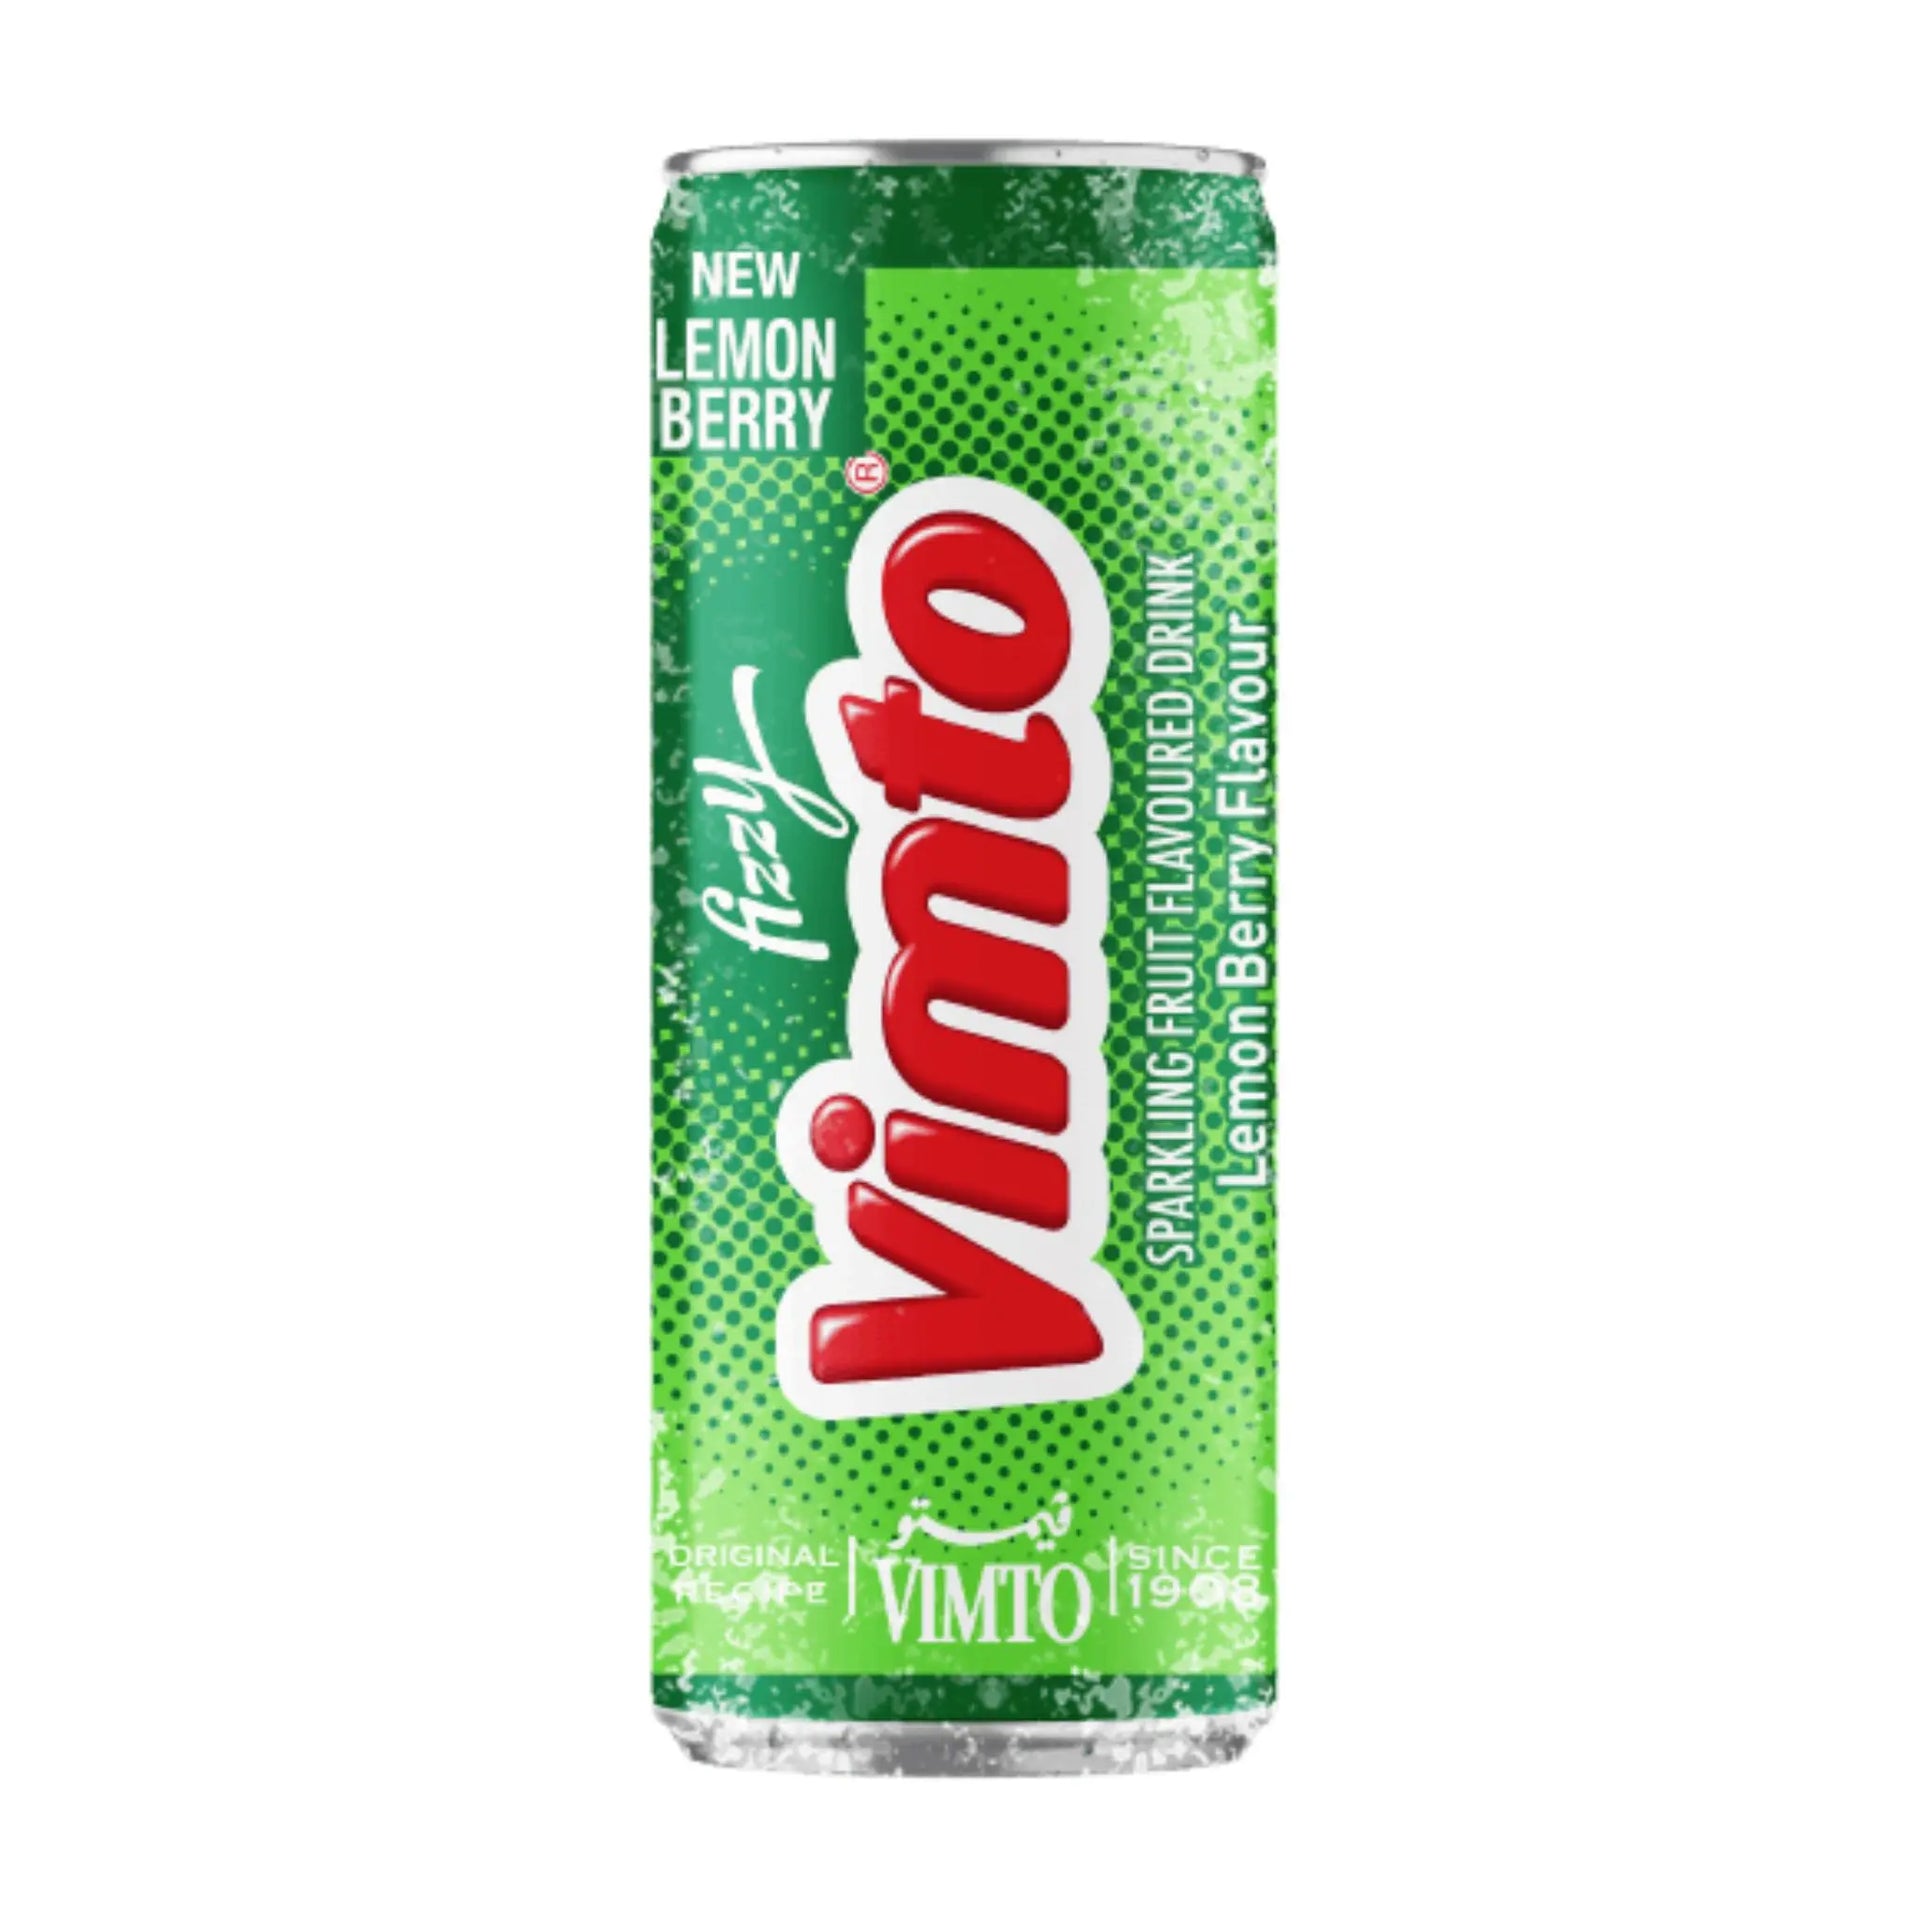 Vimto Fizzy Sparkling Lemon Berry Fruit Drink in Can 250 ml - 30x250ml (1 carton) Marino.AE